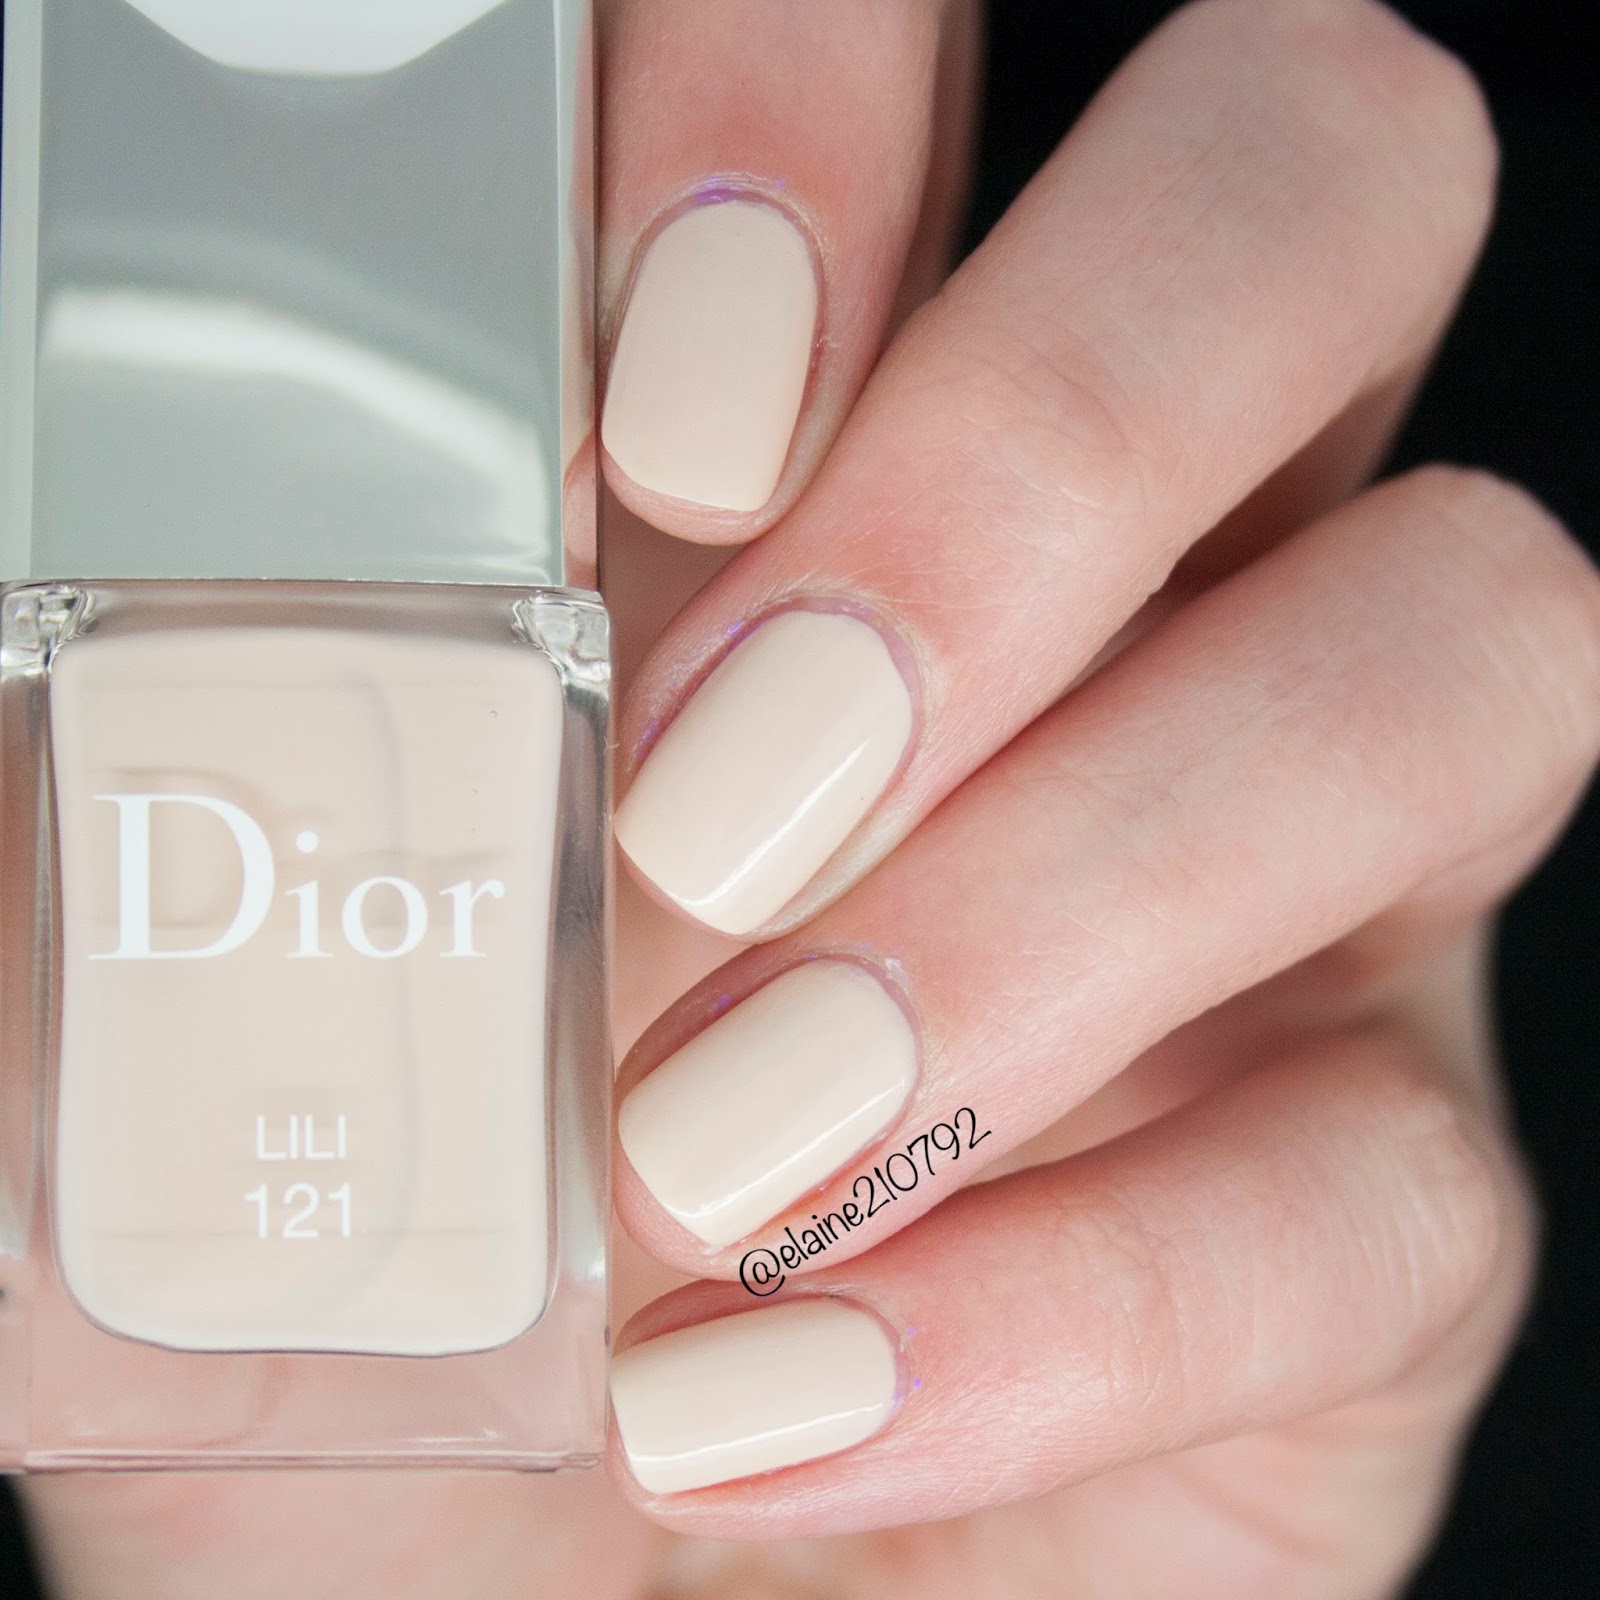 dior optic white nail polish